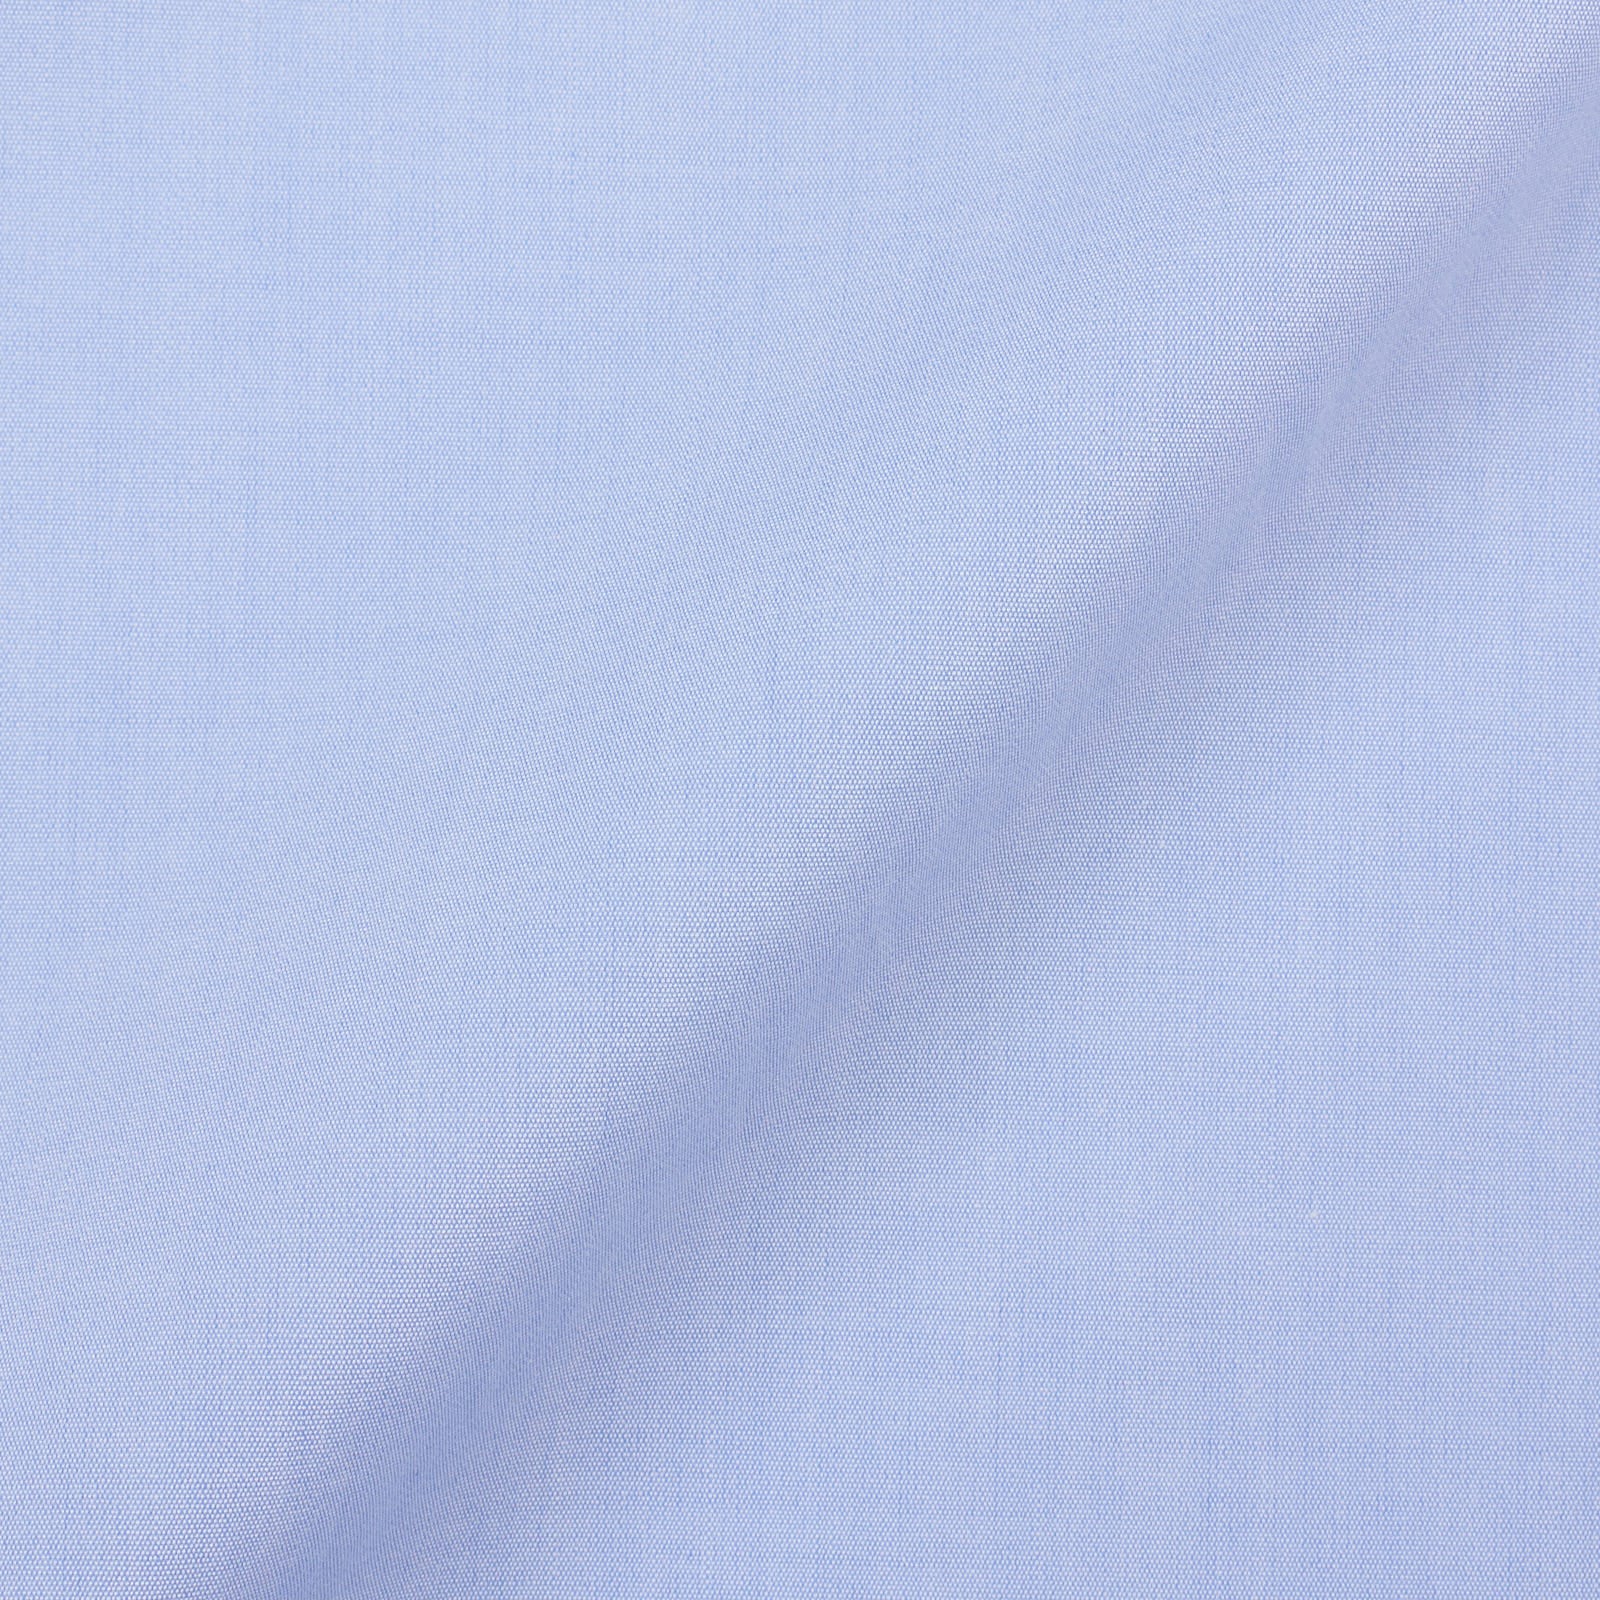 KITON Napoli Handmade Bespoke Light Blue Poplin Cotton Dress Shirt EU 40 US 15.75 KITON